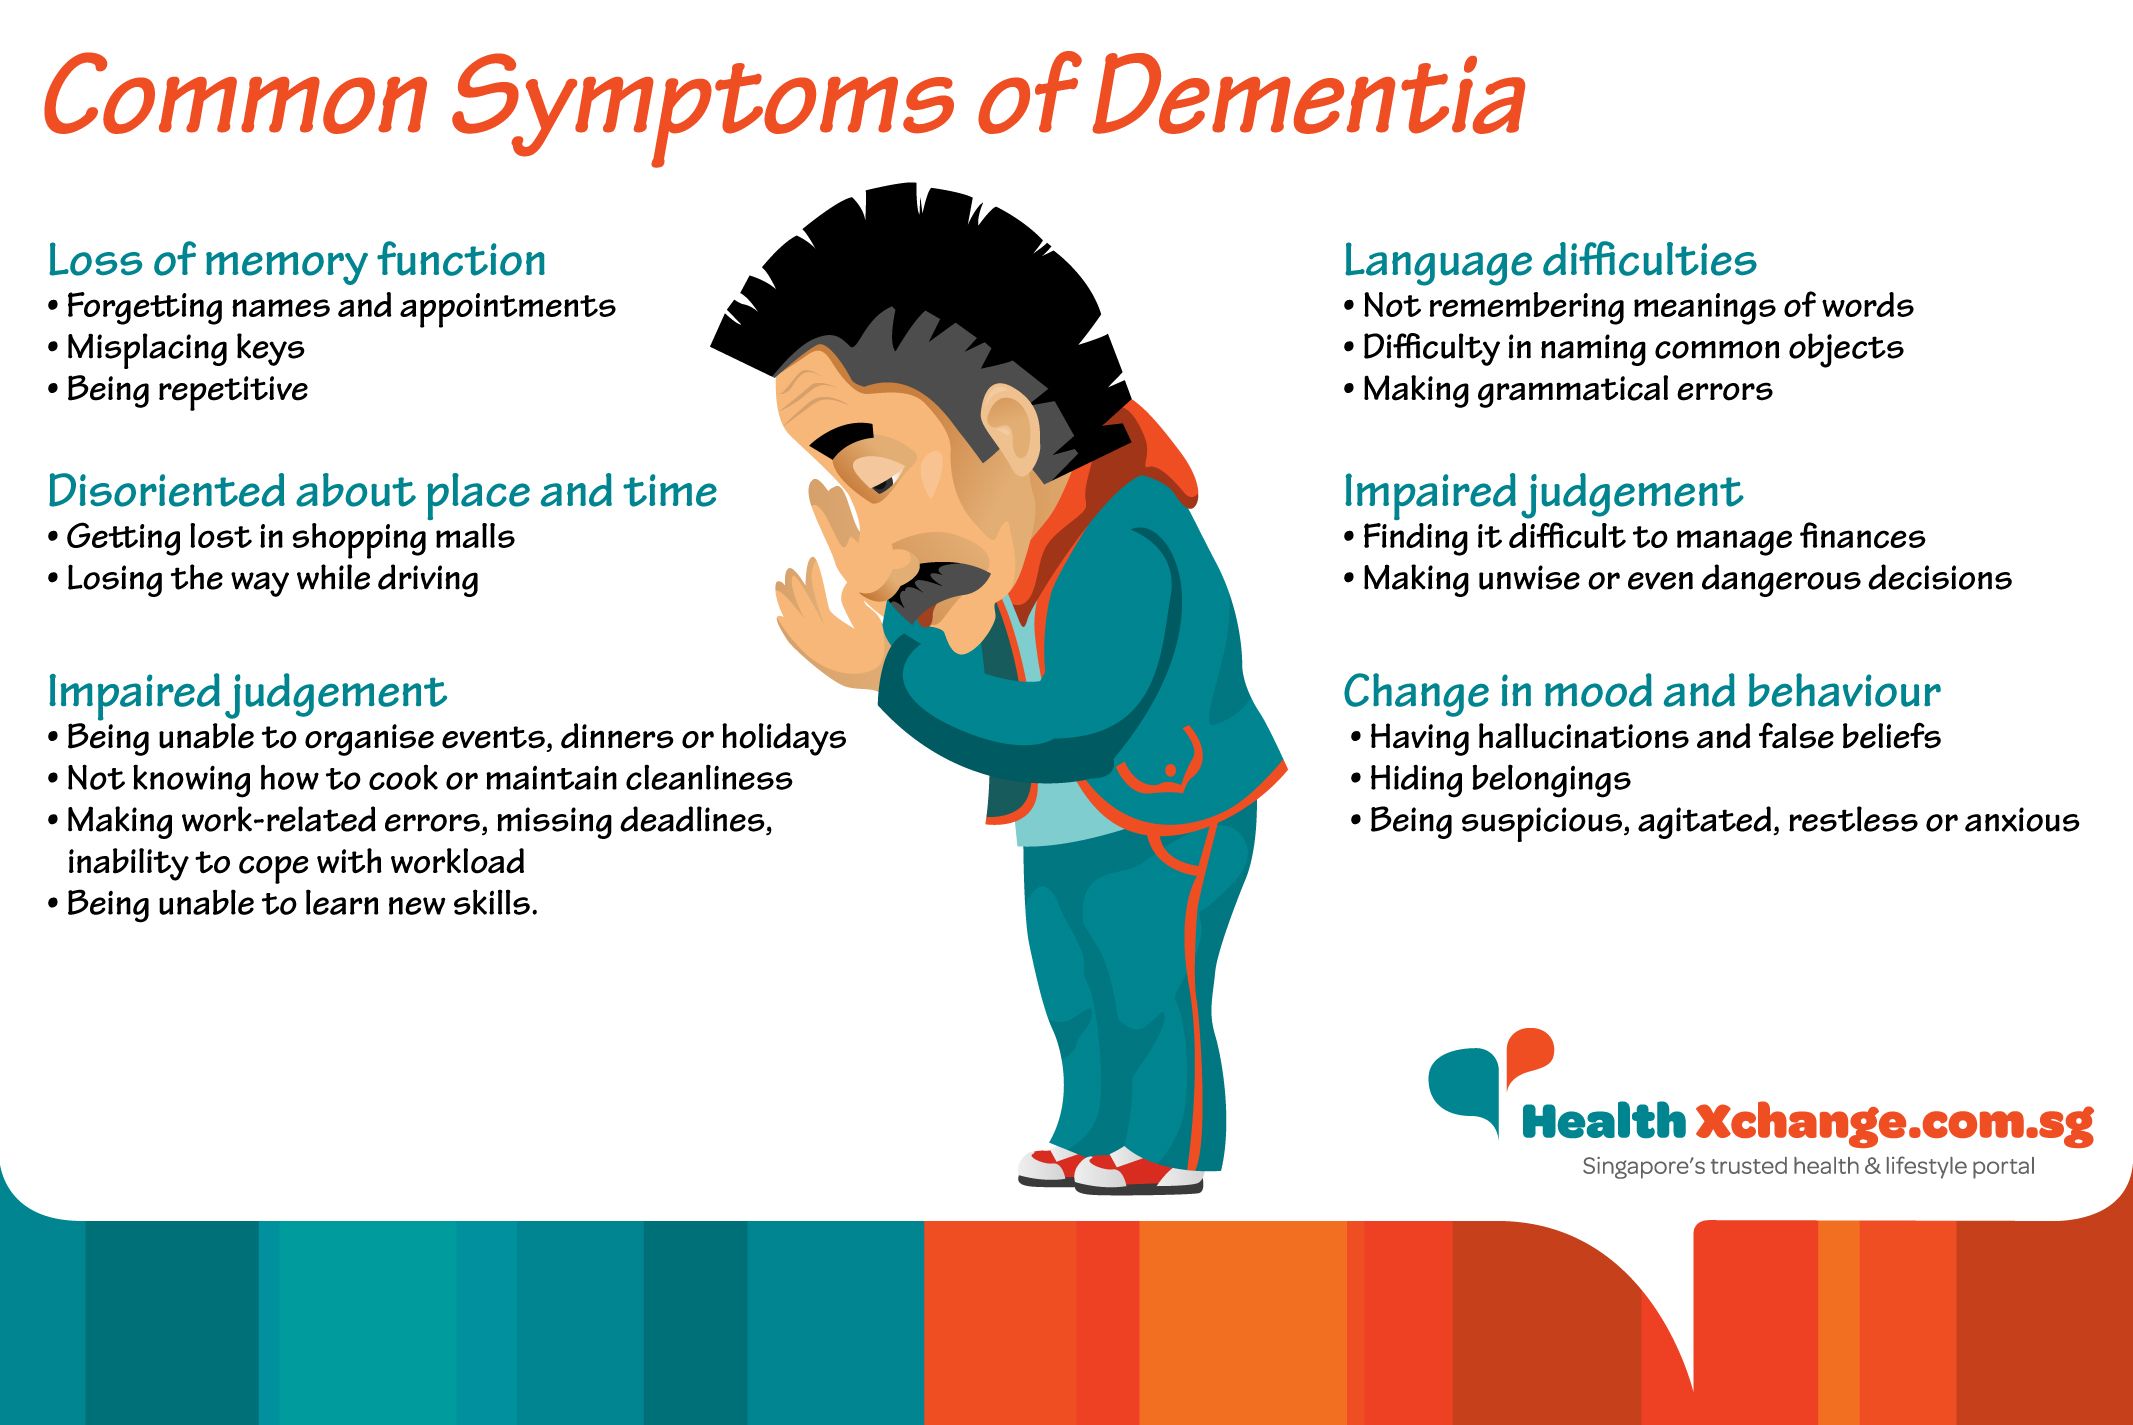 Common symptoms of dementia